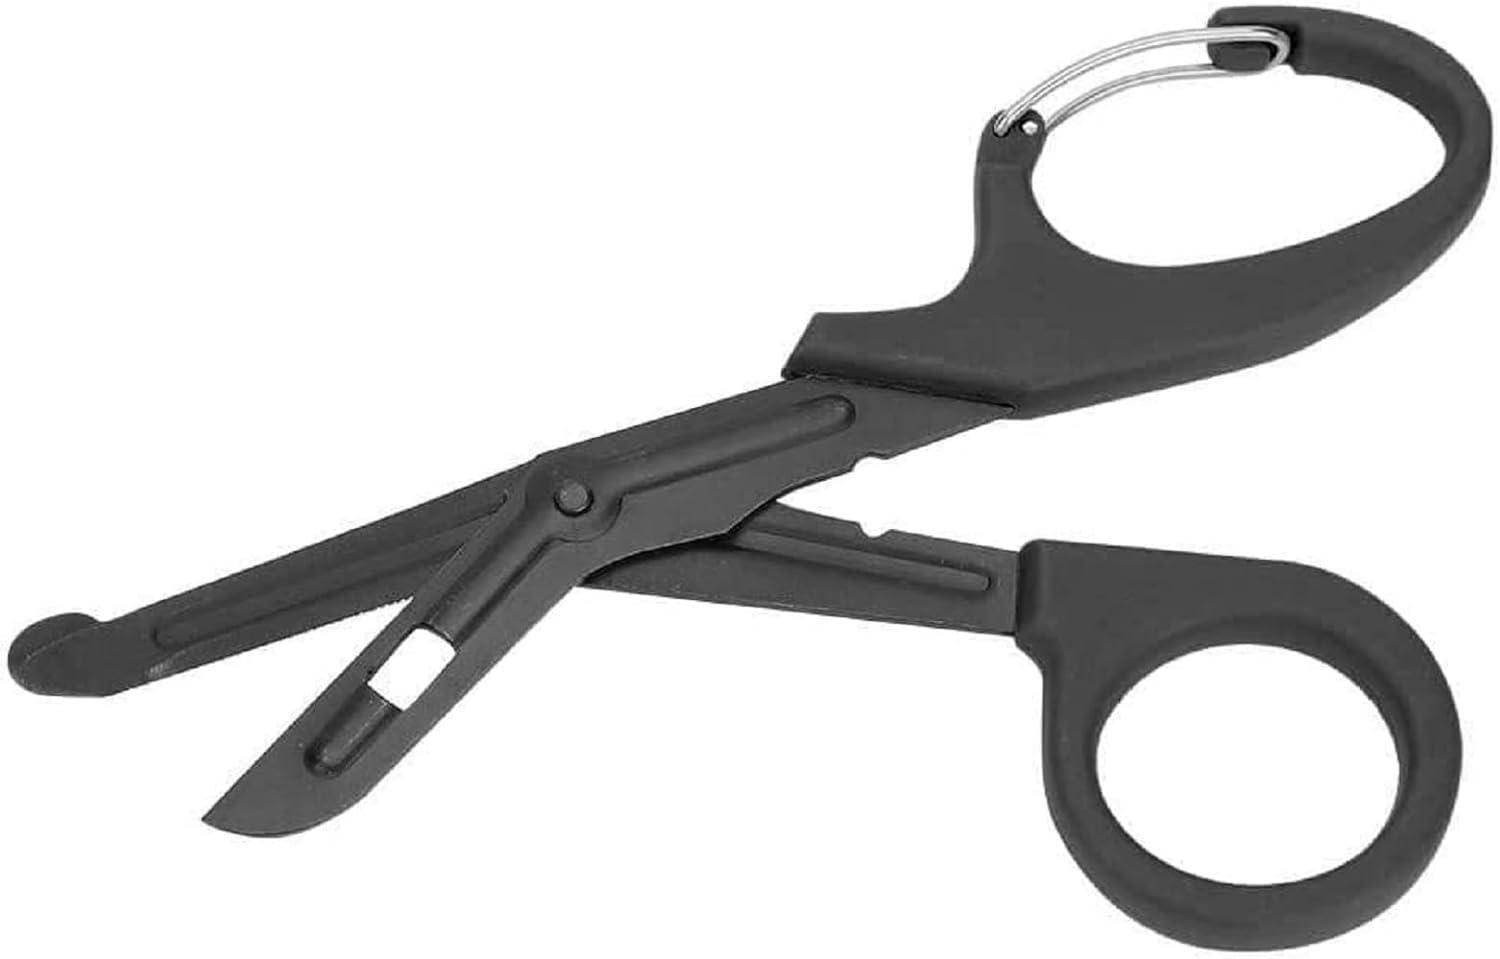  20 Pack Medical Scissors Badge Scissors for Nurses Stainless  Steel Blades Emergency Bandage Shears 6 Inch Nurse Accessories for Nurses  Doctor Supplies, Black : Industrial & Scientific